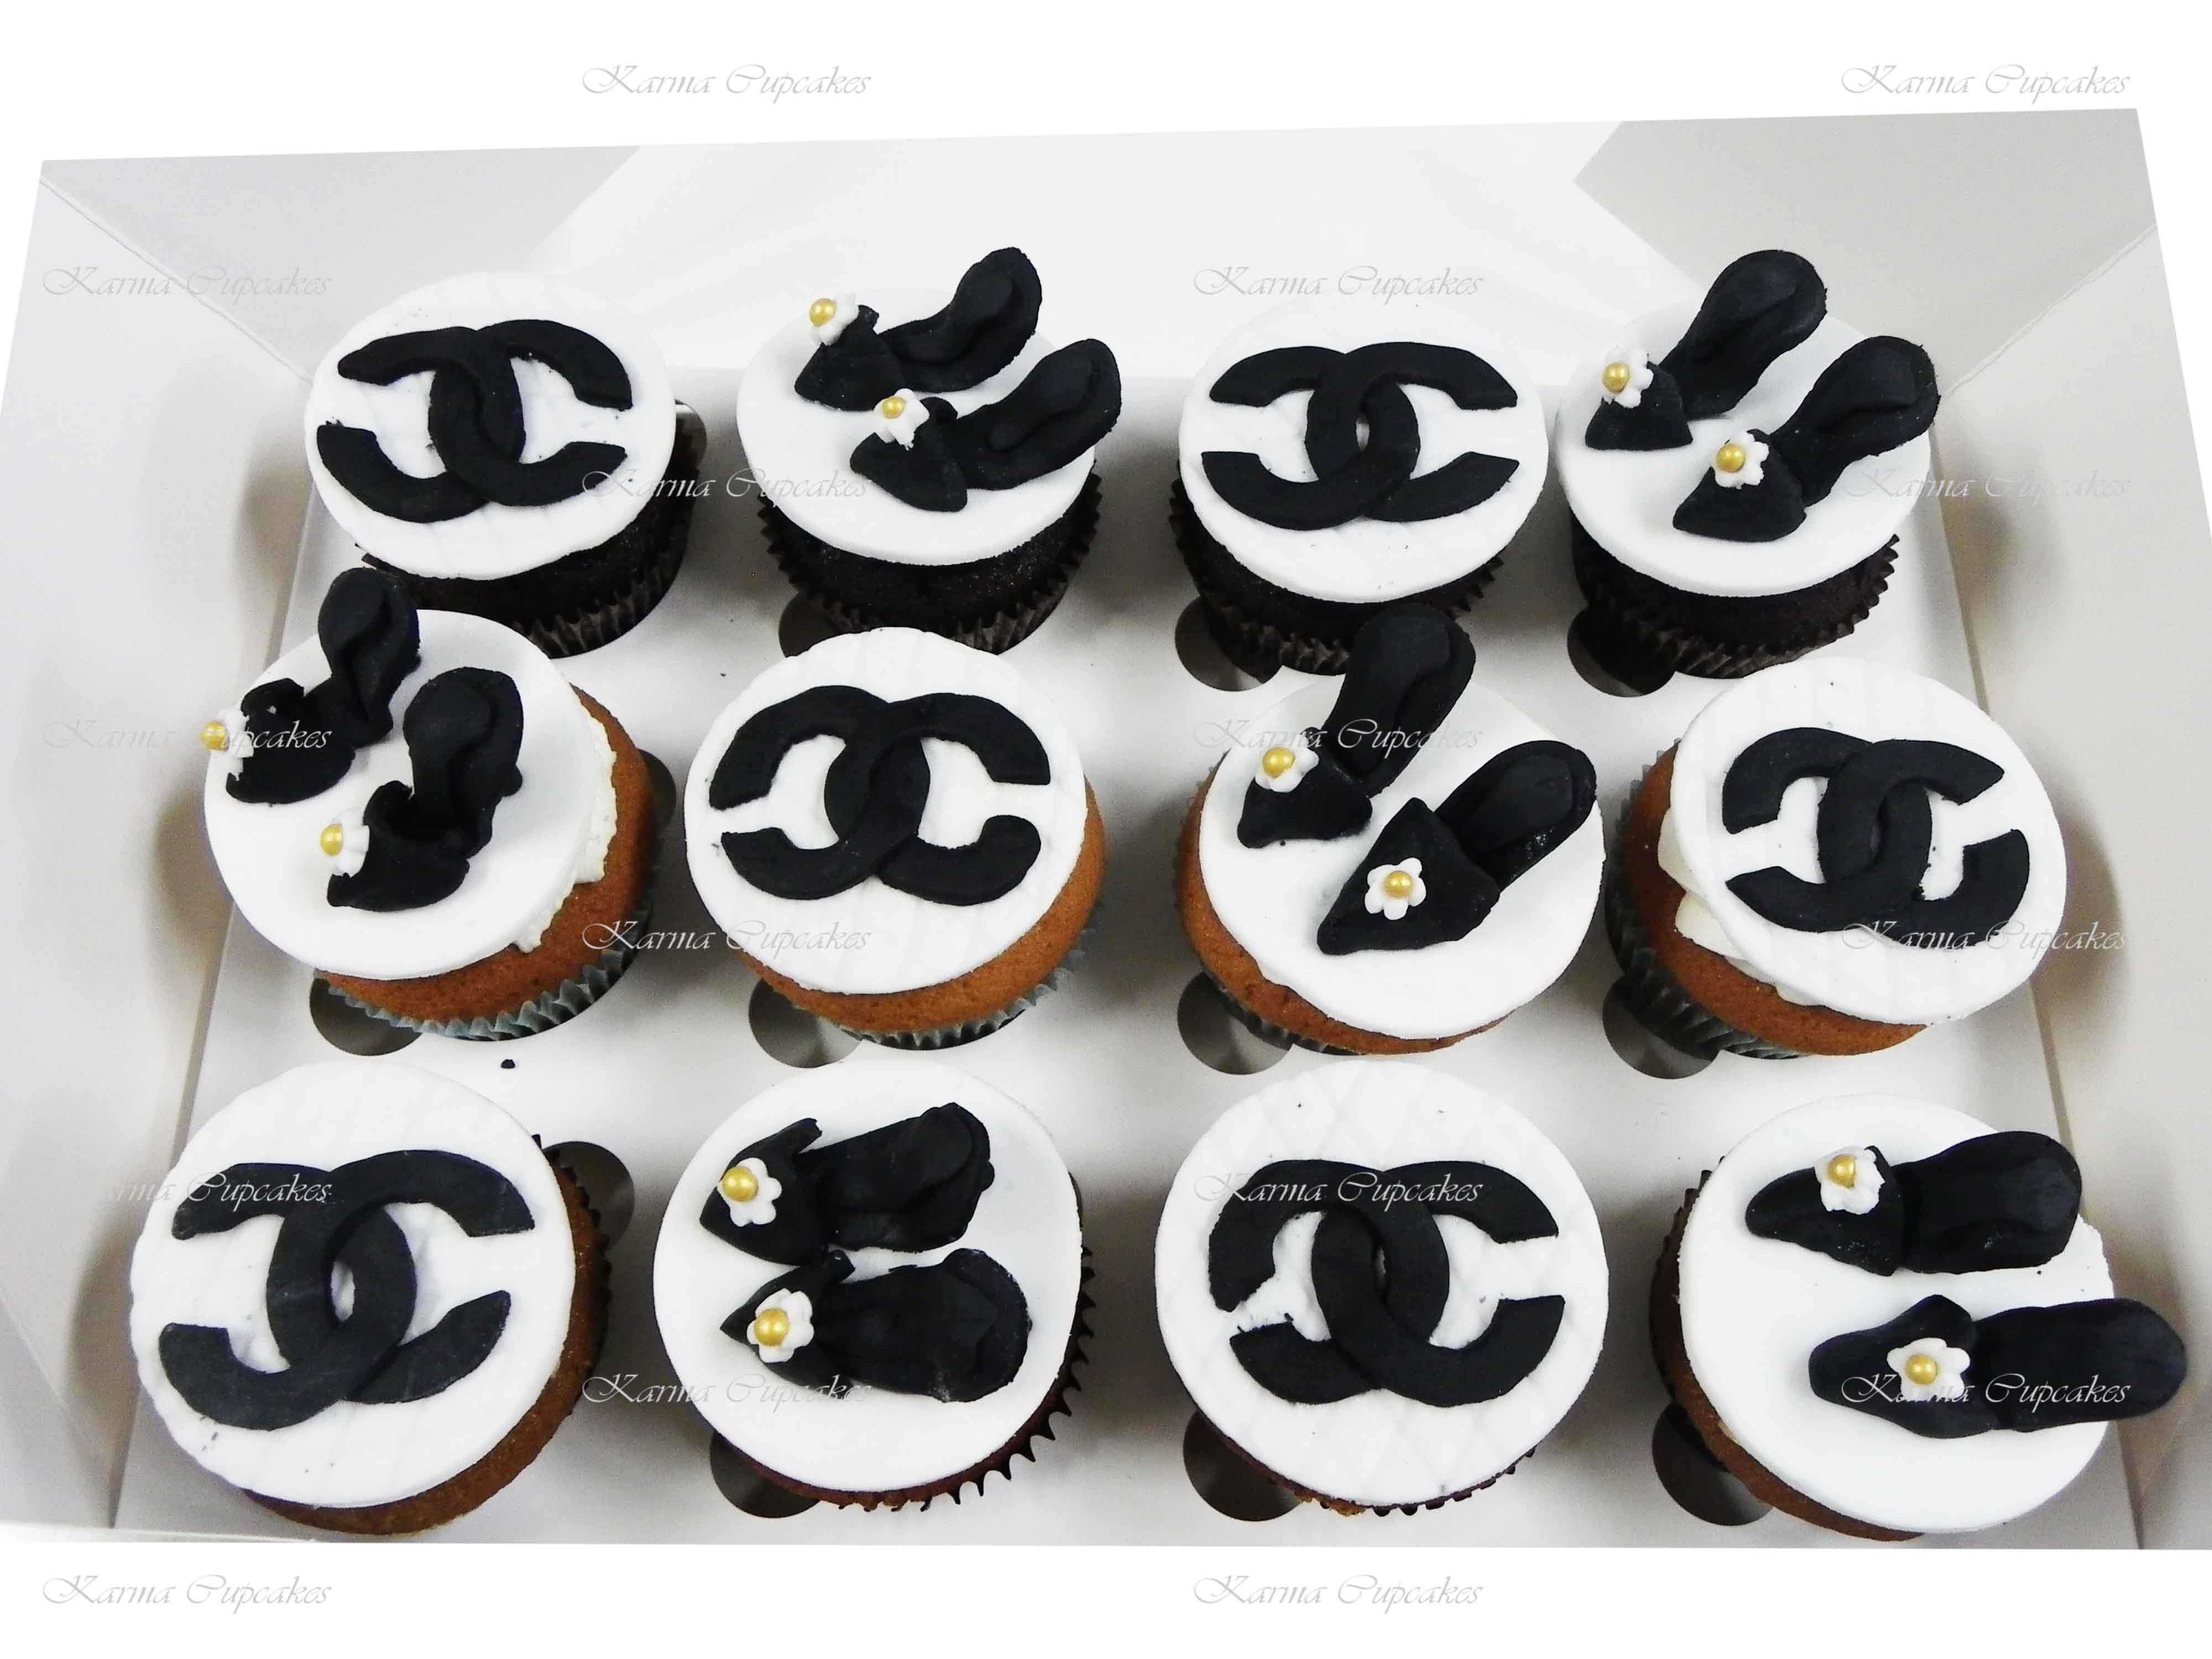 Chanel Cupcakes - Design 1